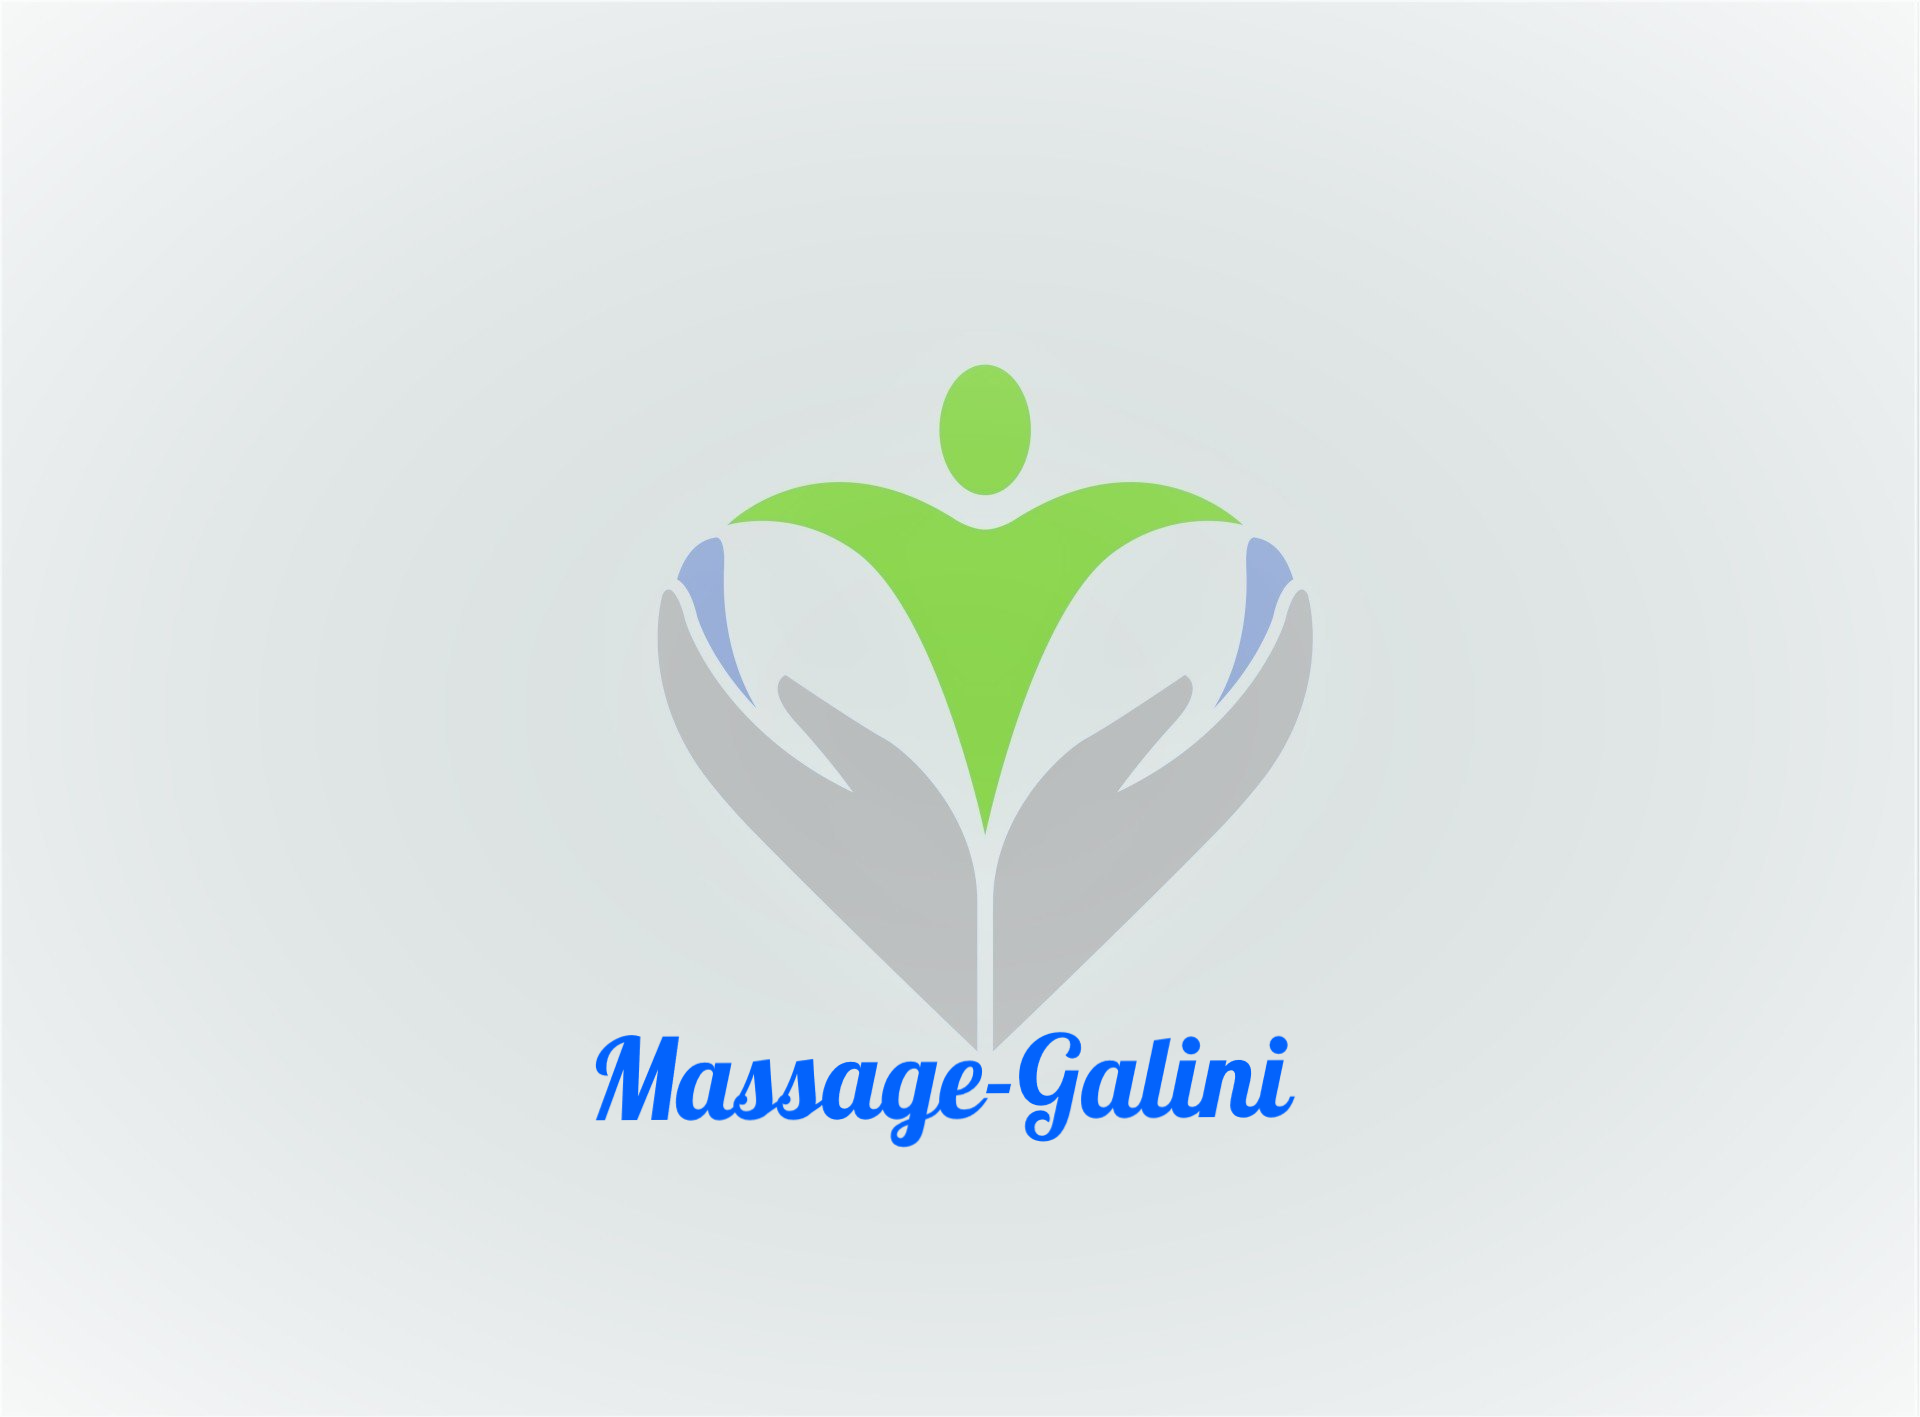 Massage -Galini